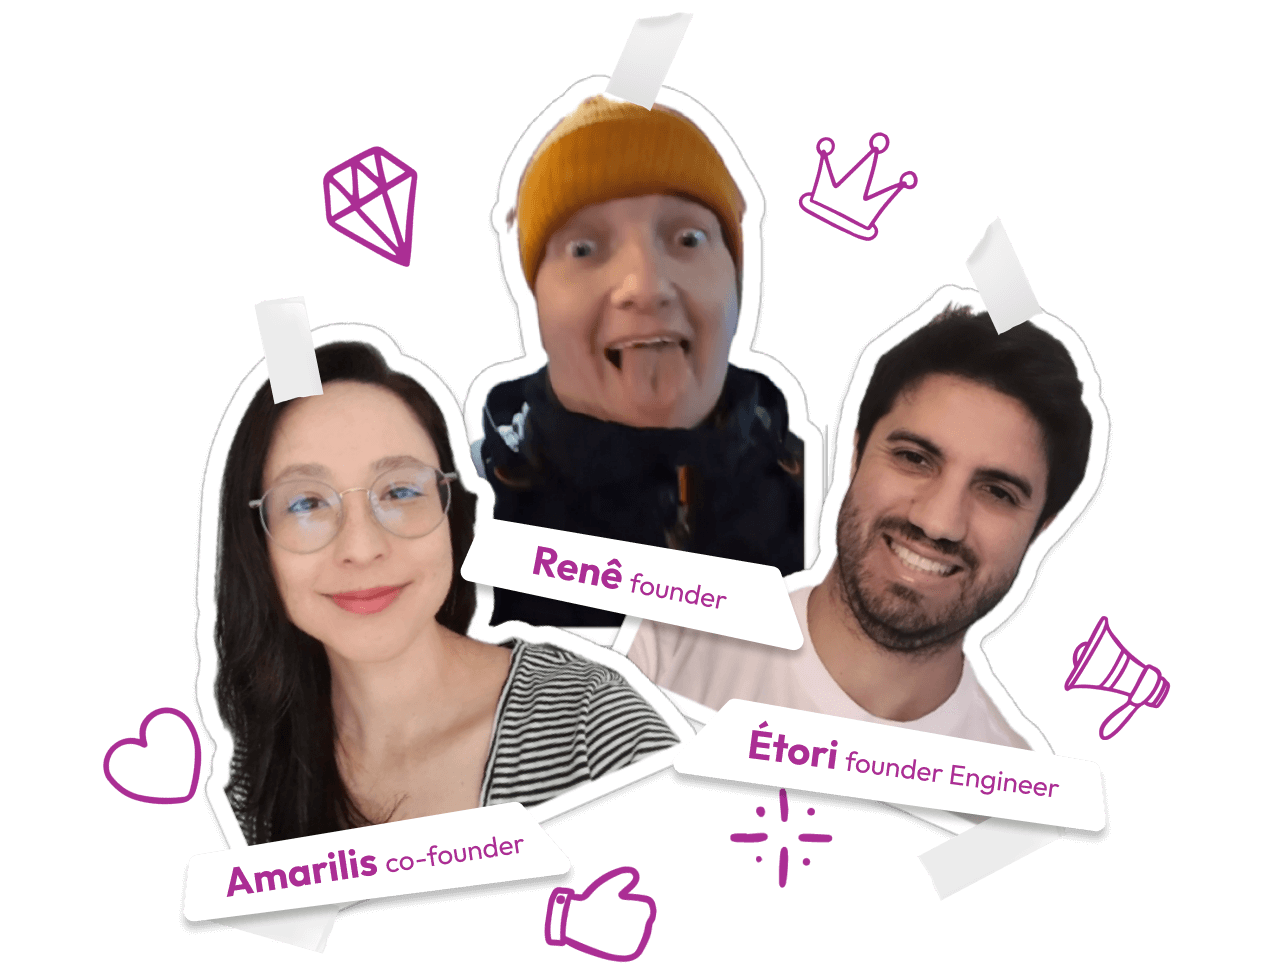 The team: Renê, founder; Amarilis, co-founder and Étori, founder engineer